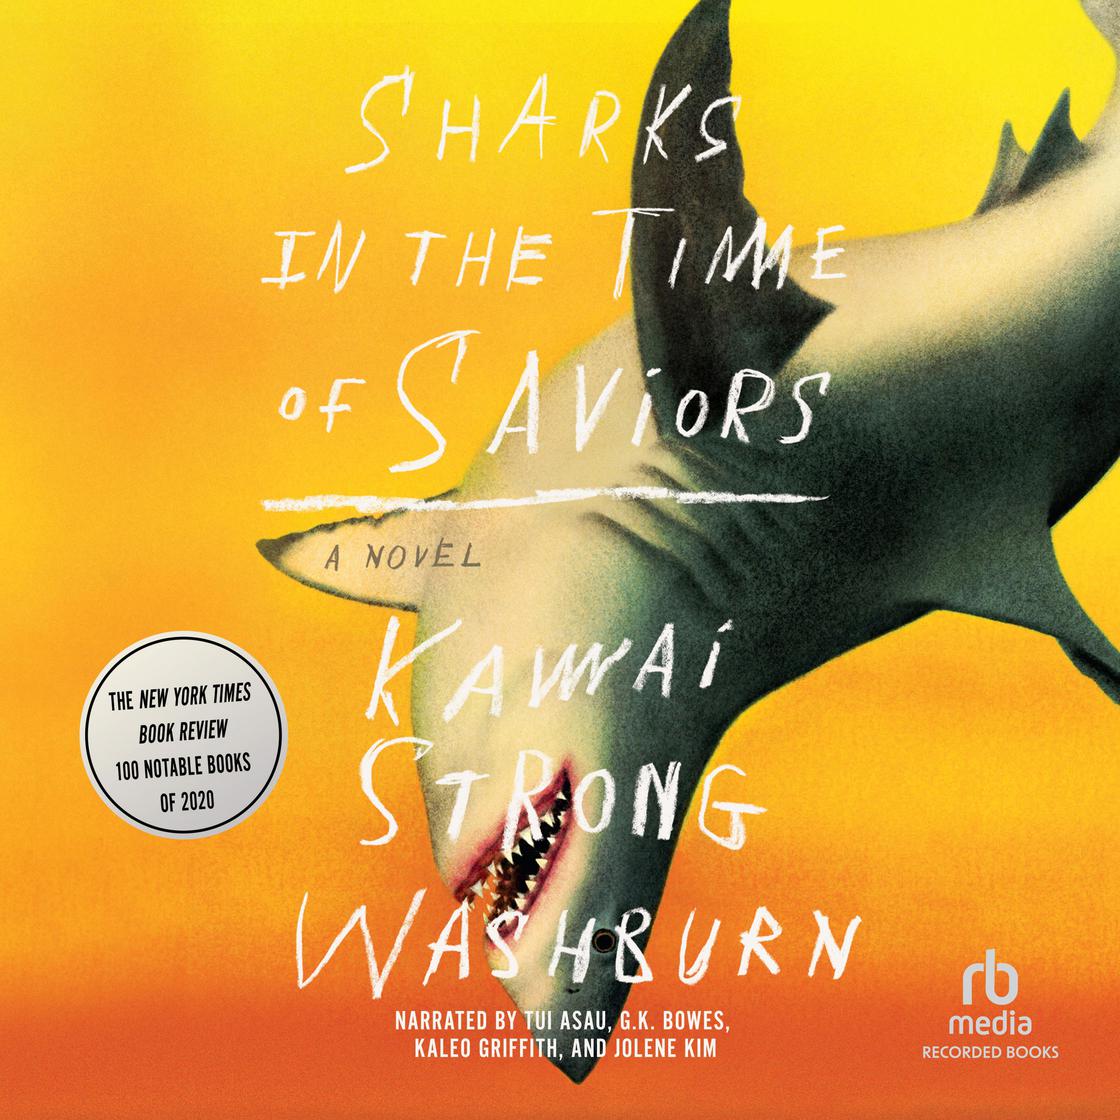 Jolene Kim, Kawai Strong Washburn, Tui Asau, G.K. Bowes, Kaleo Griffith: Sharks in the Time of Saviors (AudiobookFormat, 2020, Recorded Books)